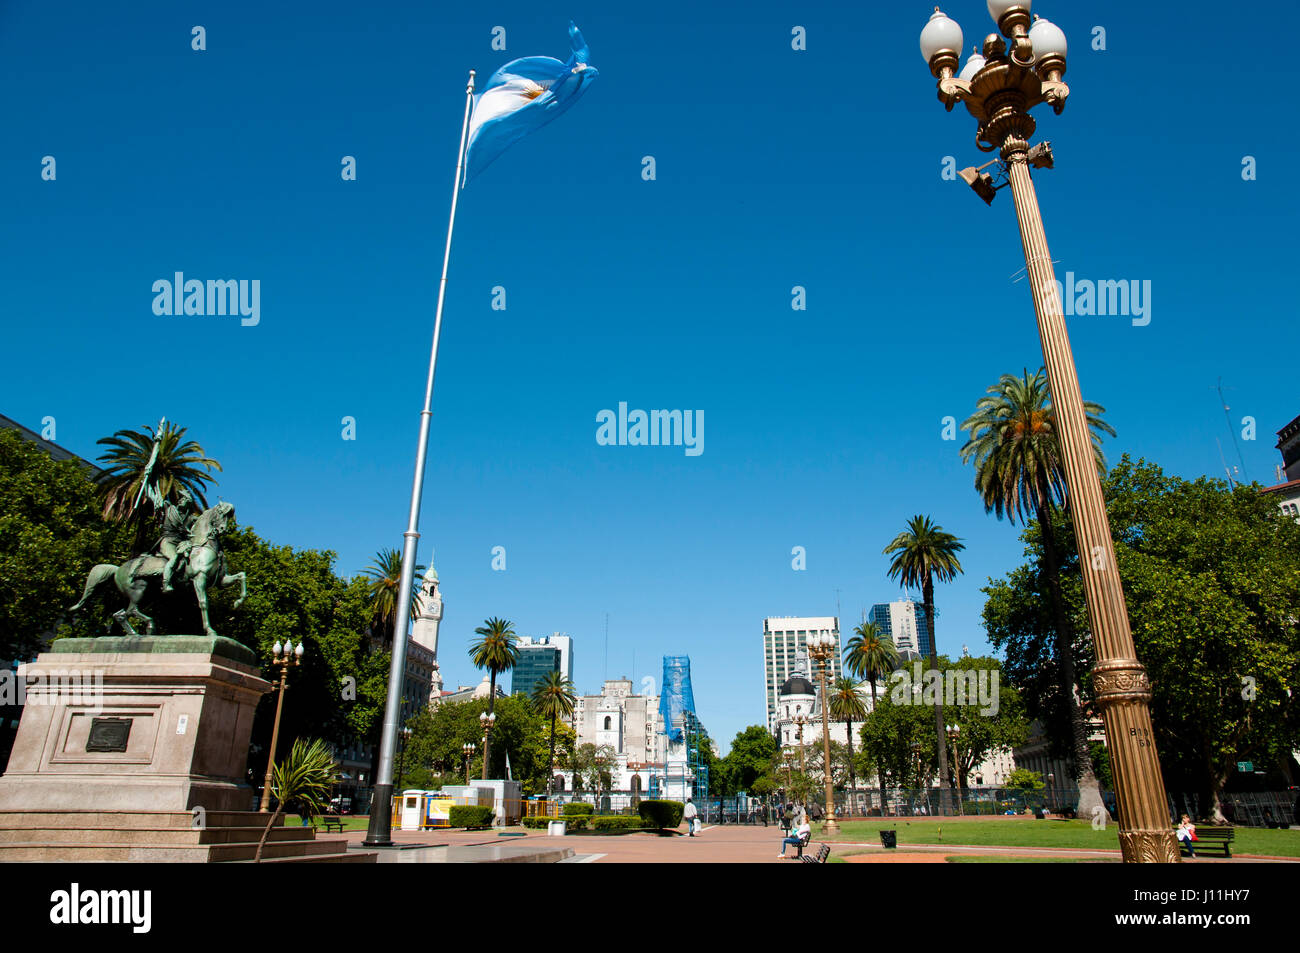 Plaza de Mayo - Buenos Aires - Argentina Stock Photo